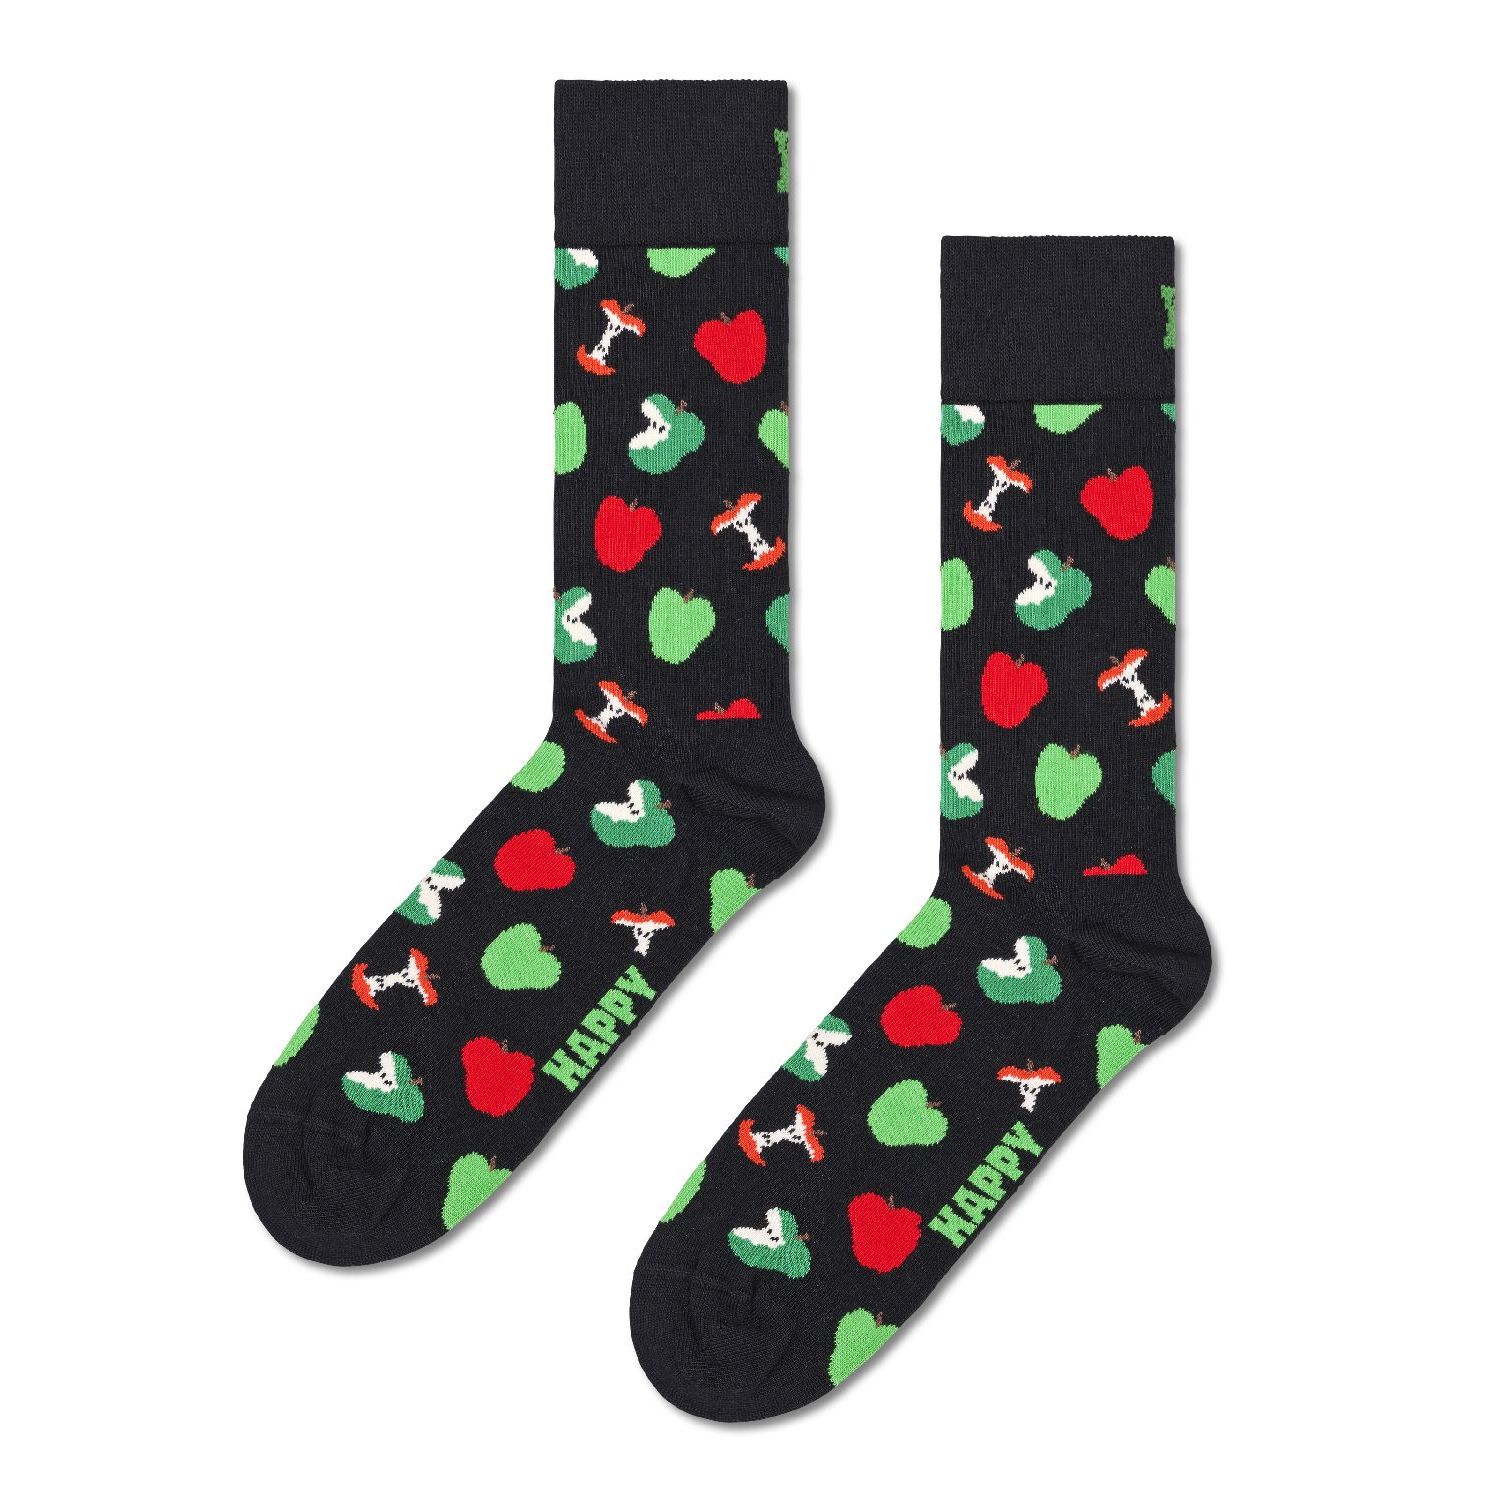 Happy Socks Apple Sock